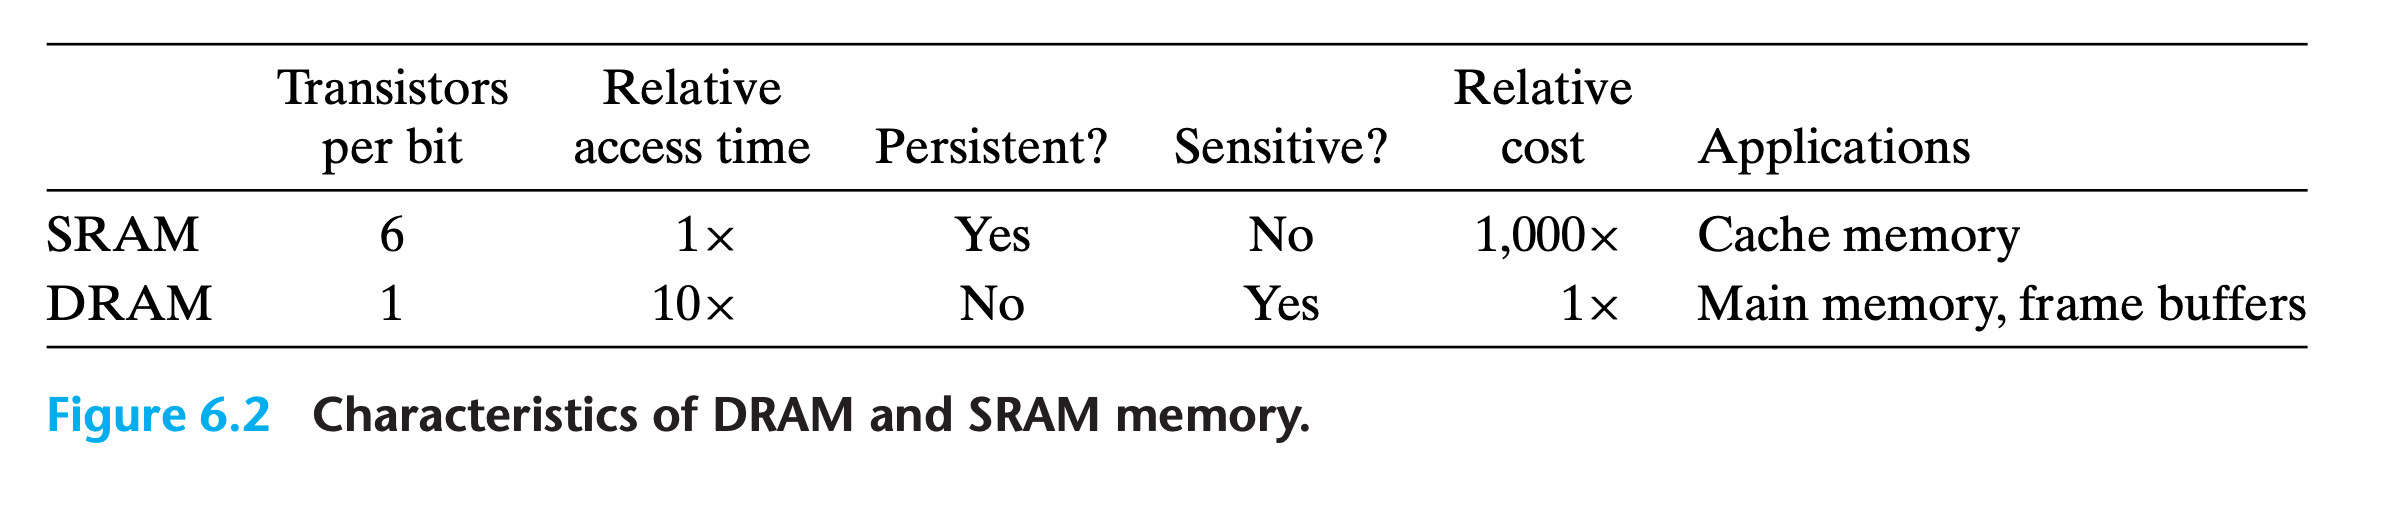 SRAM vs DRAM